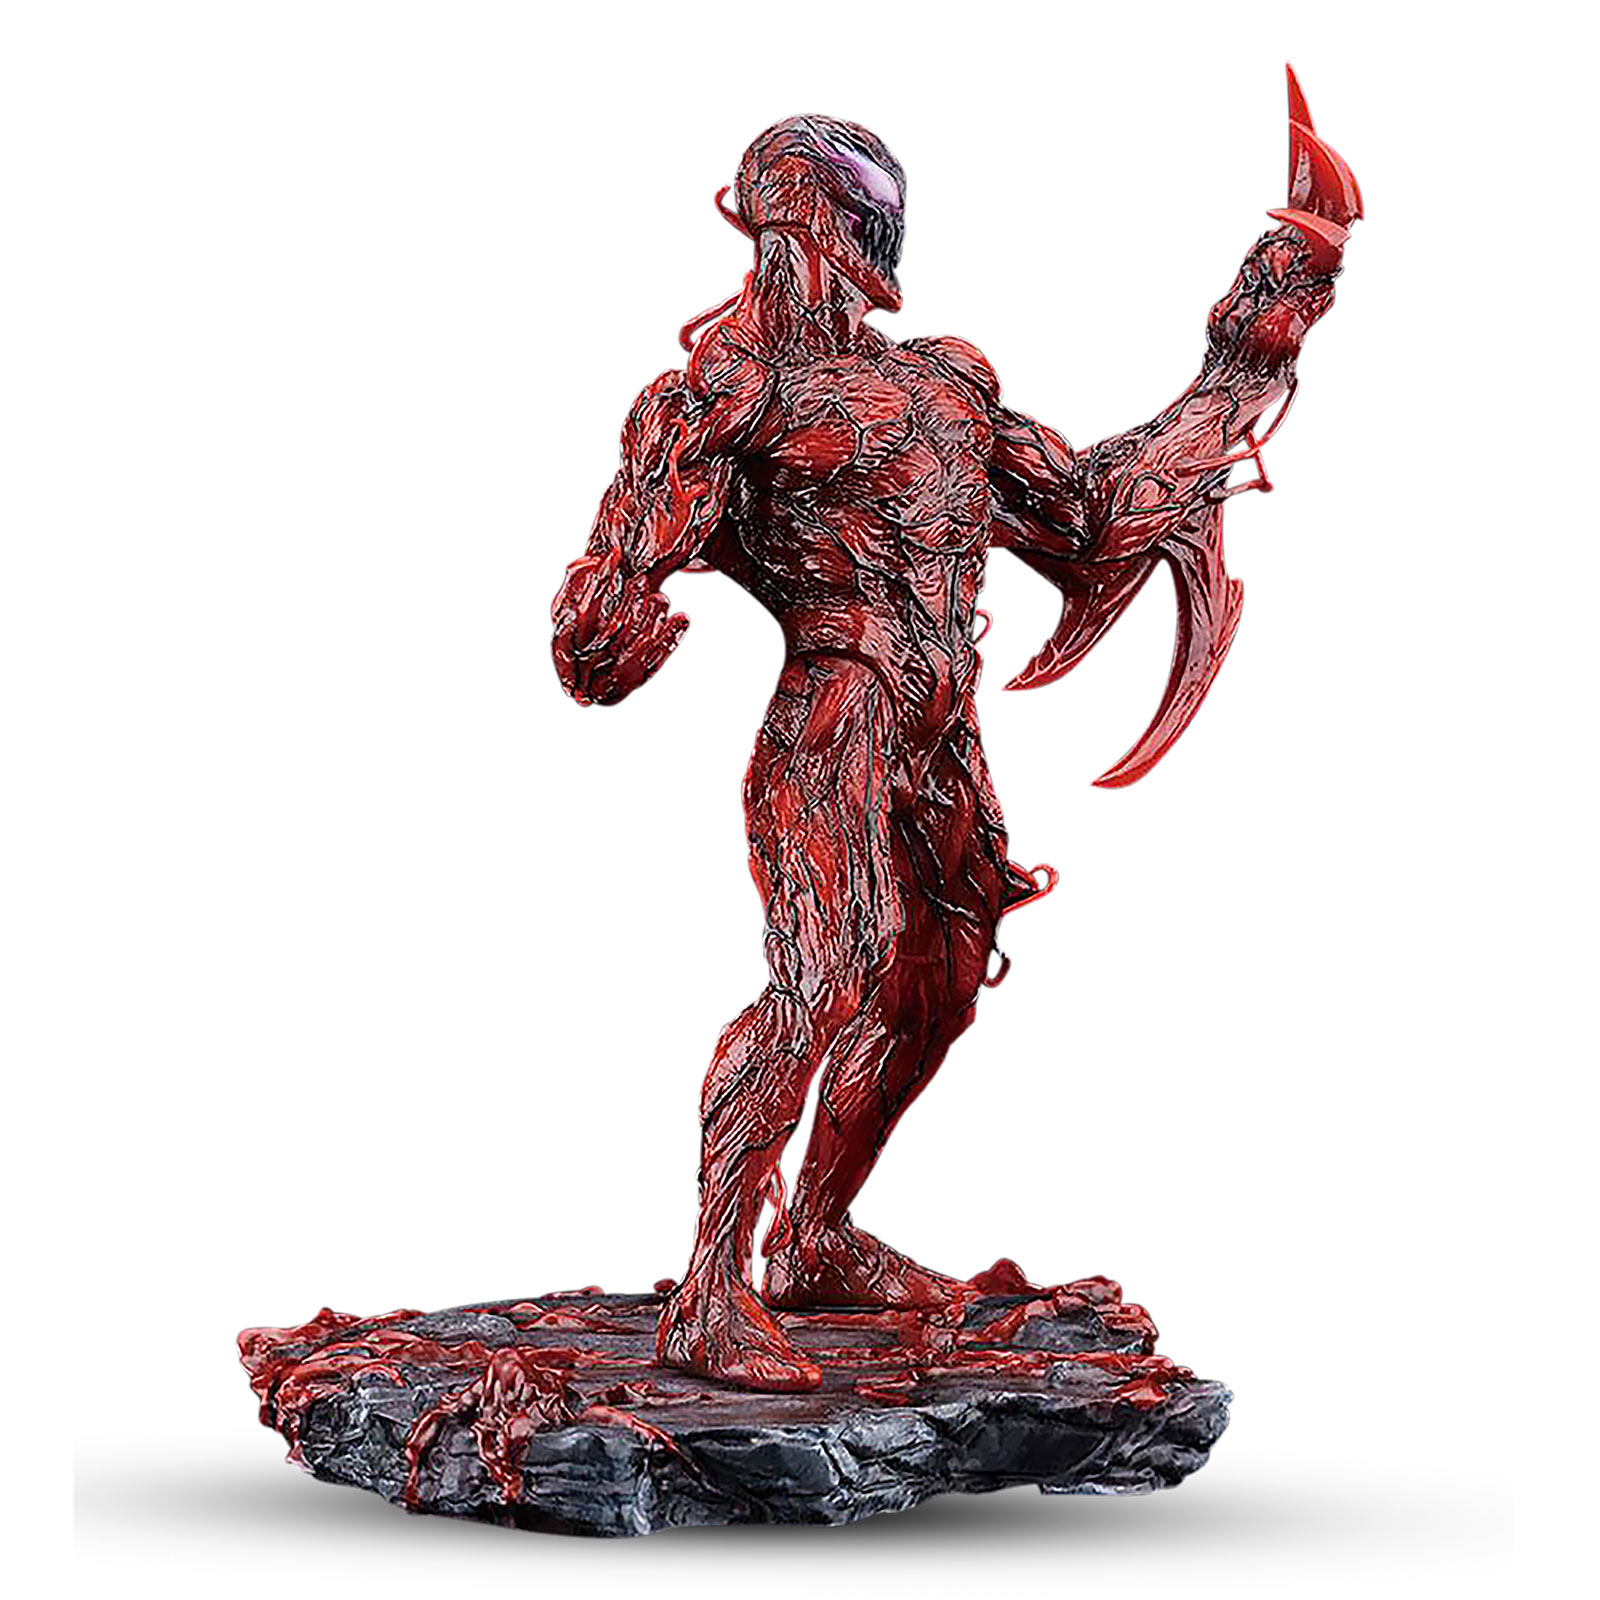 Marvel Universe - Carnage ARTFX+ Statue Renewal Edition